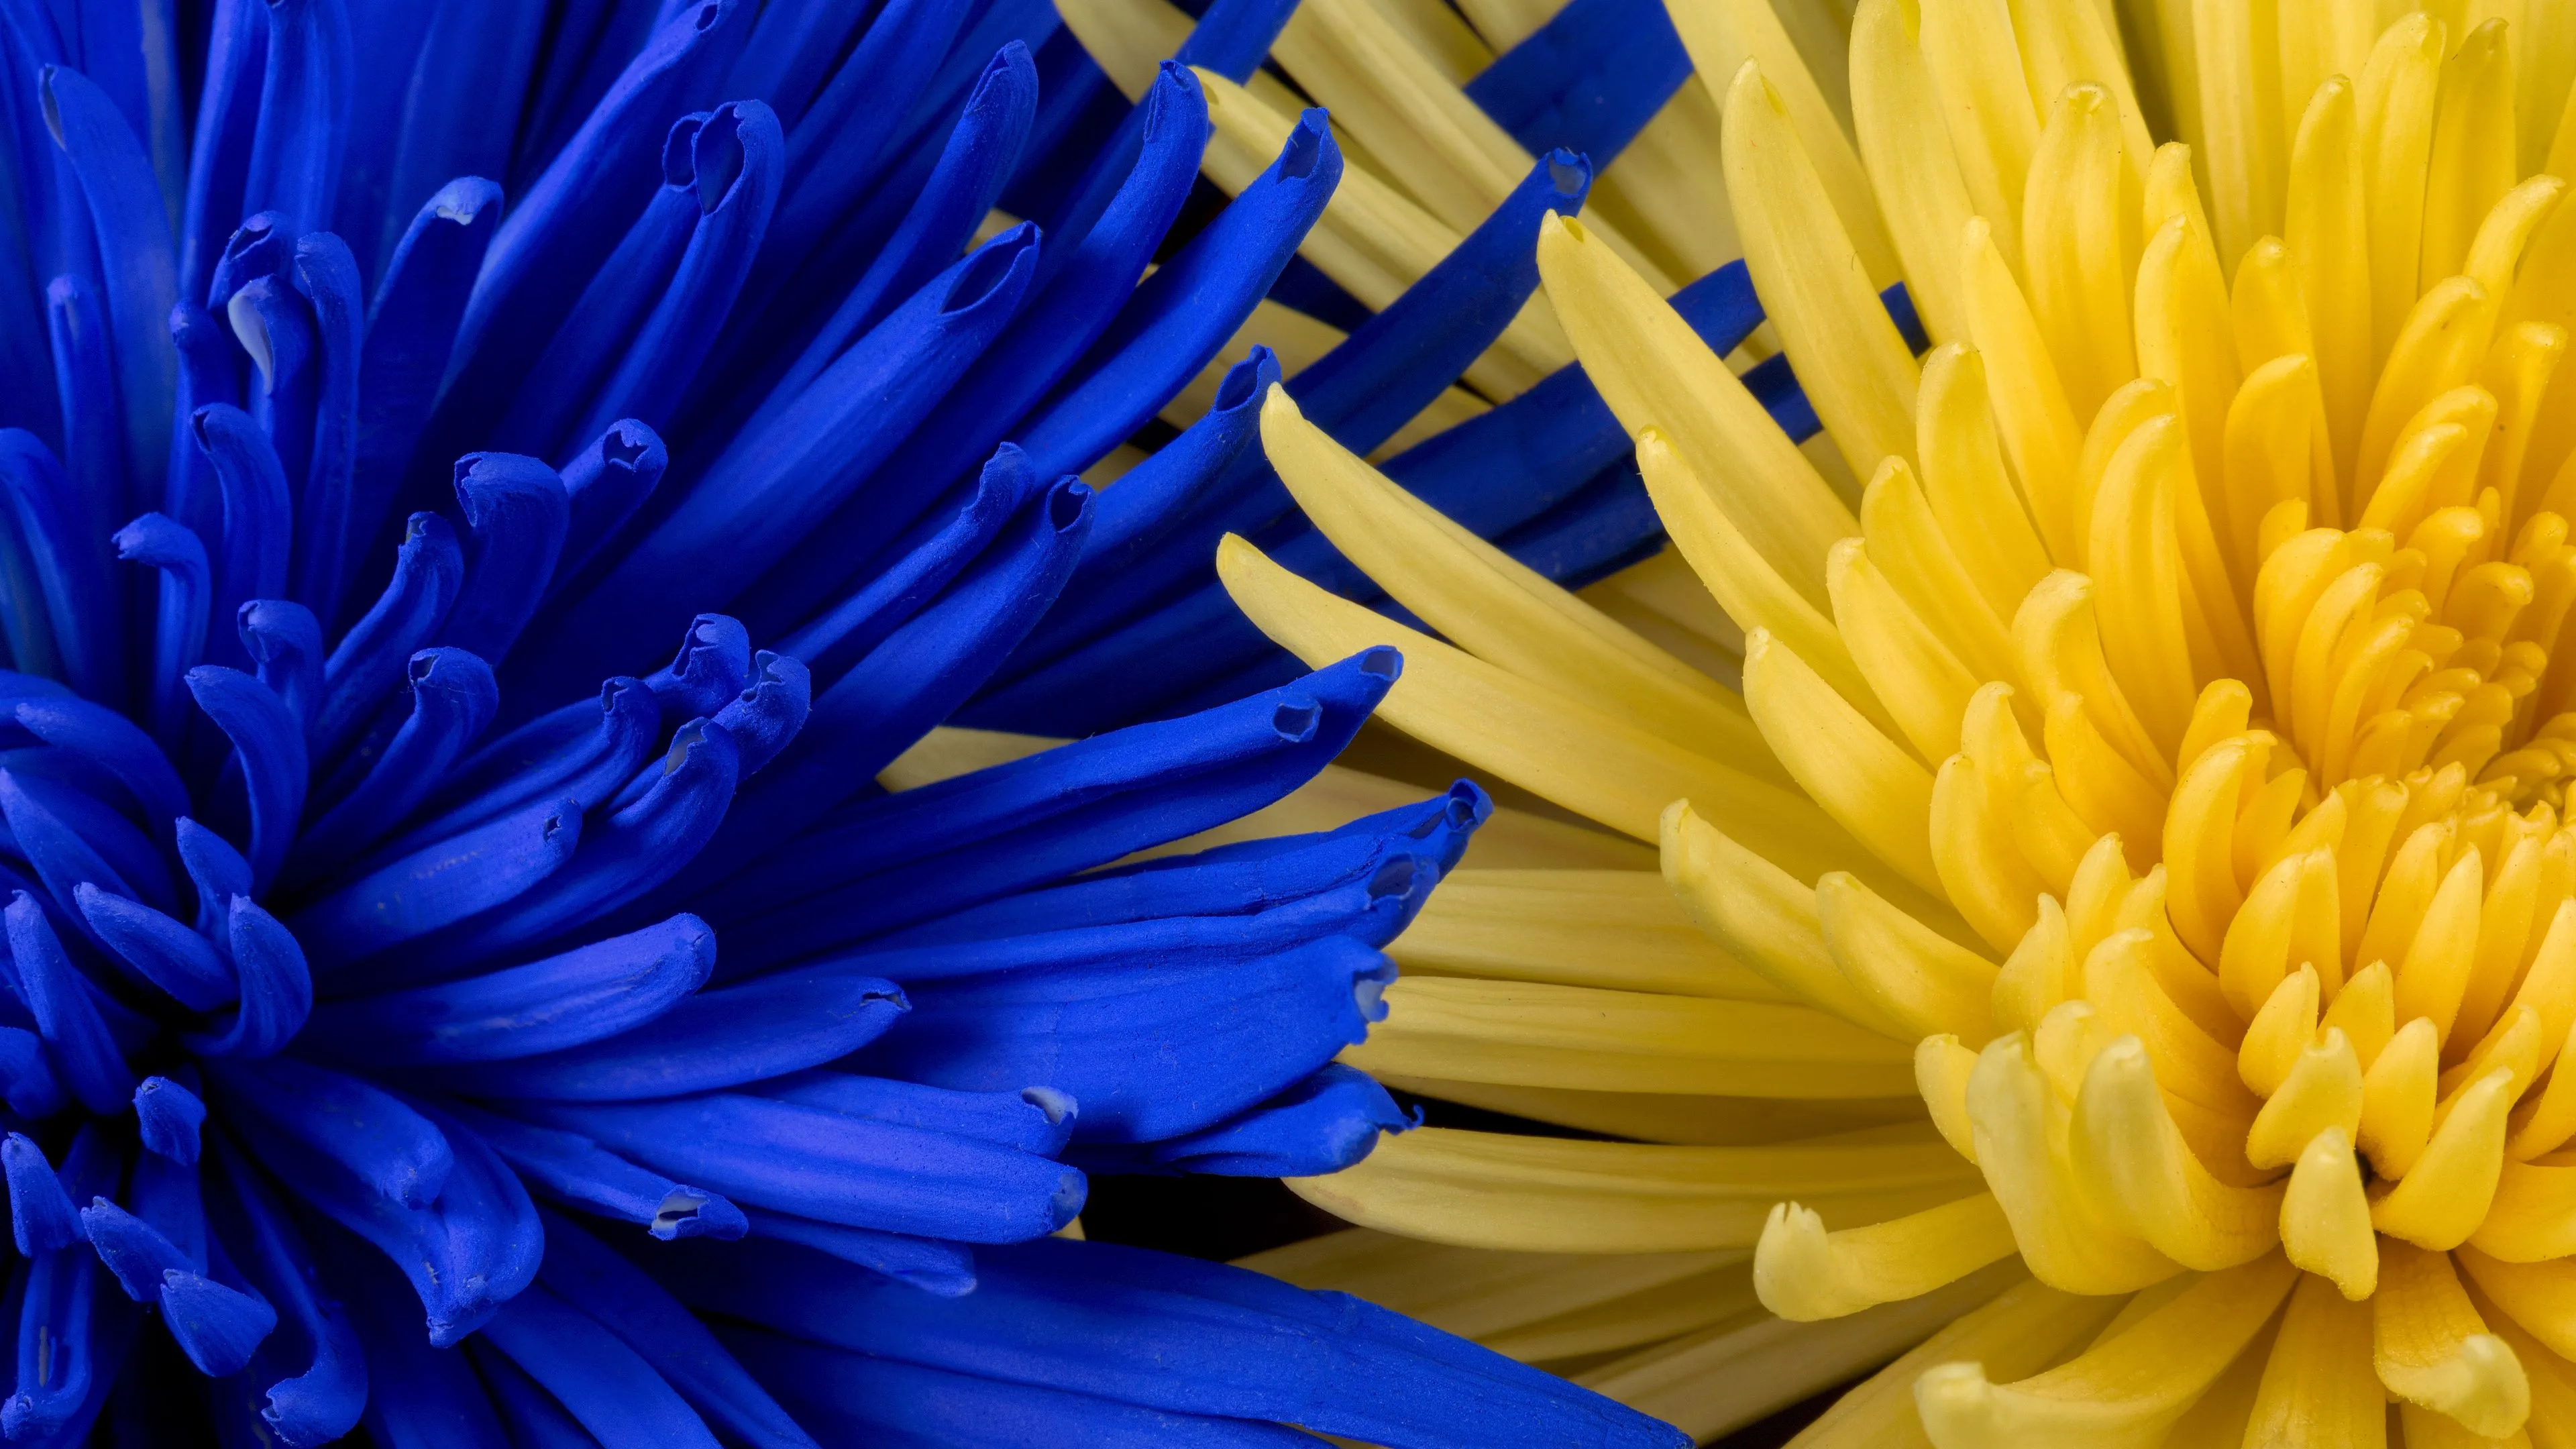 flowers blue yellow petals 4k 1692284604